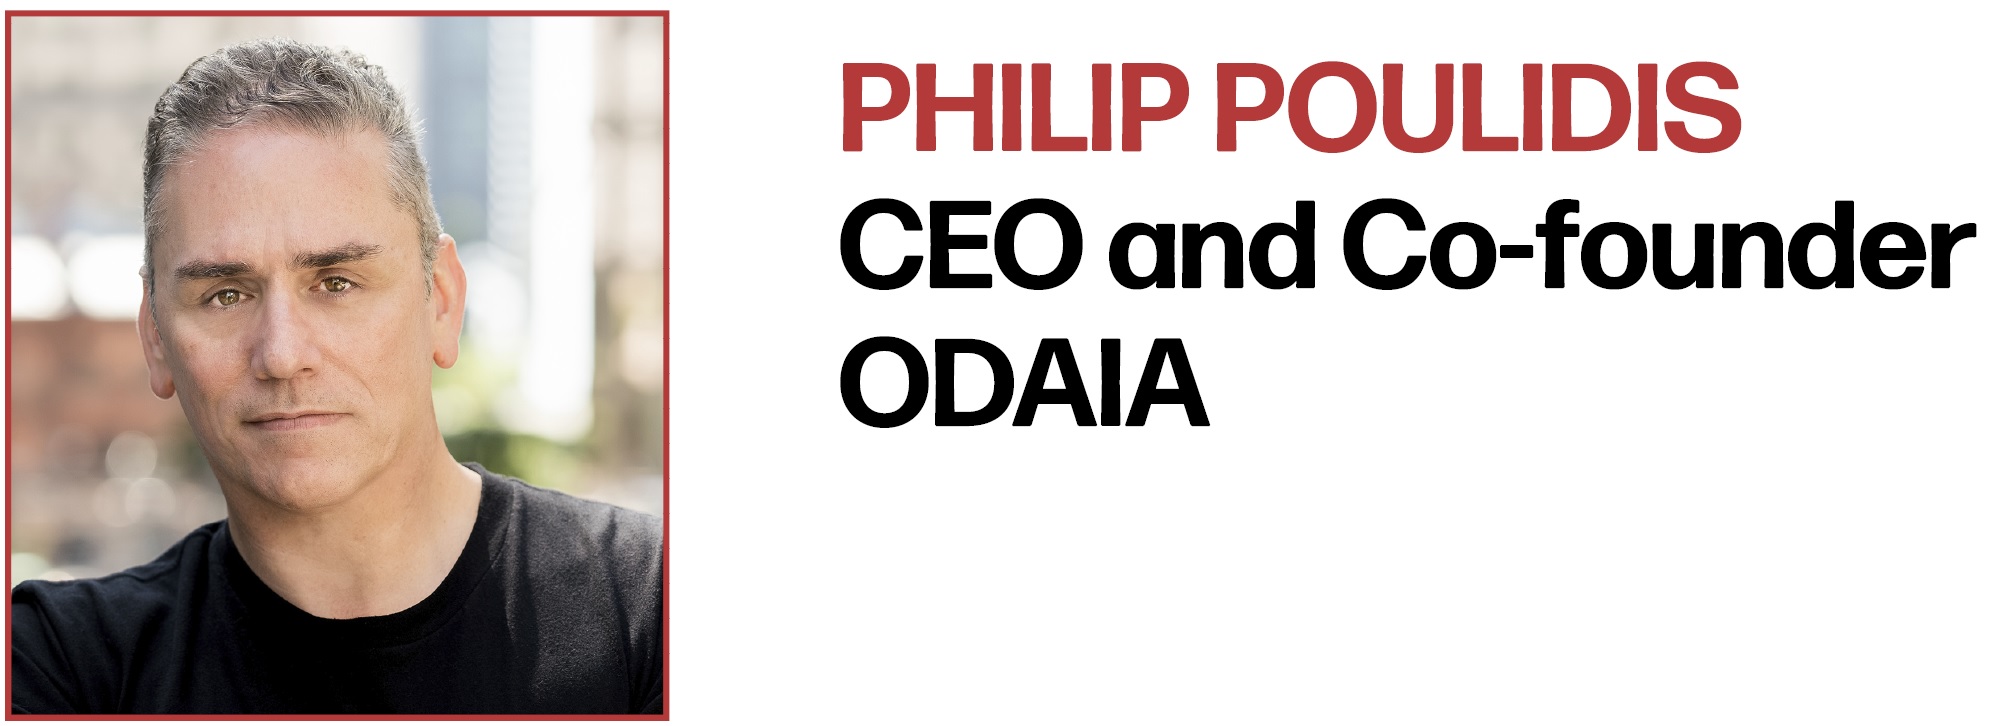 Philip Poulidis CEO and Co-founder ODAIA 